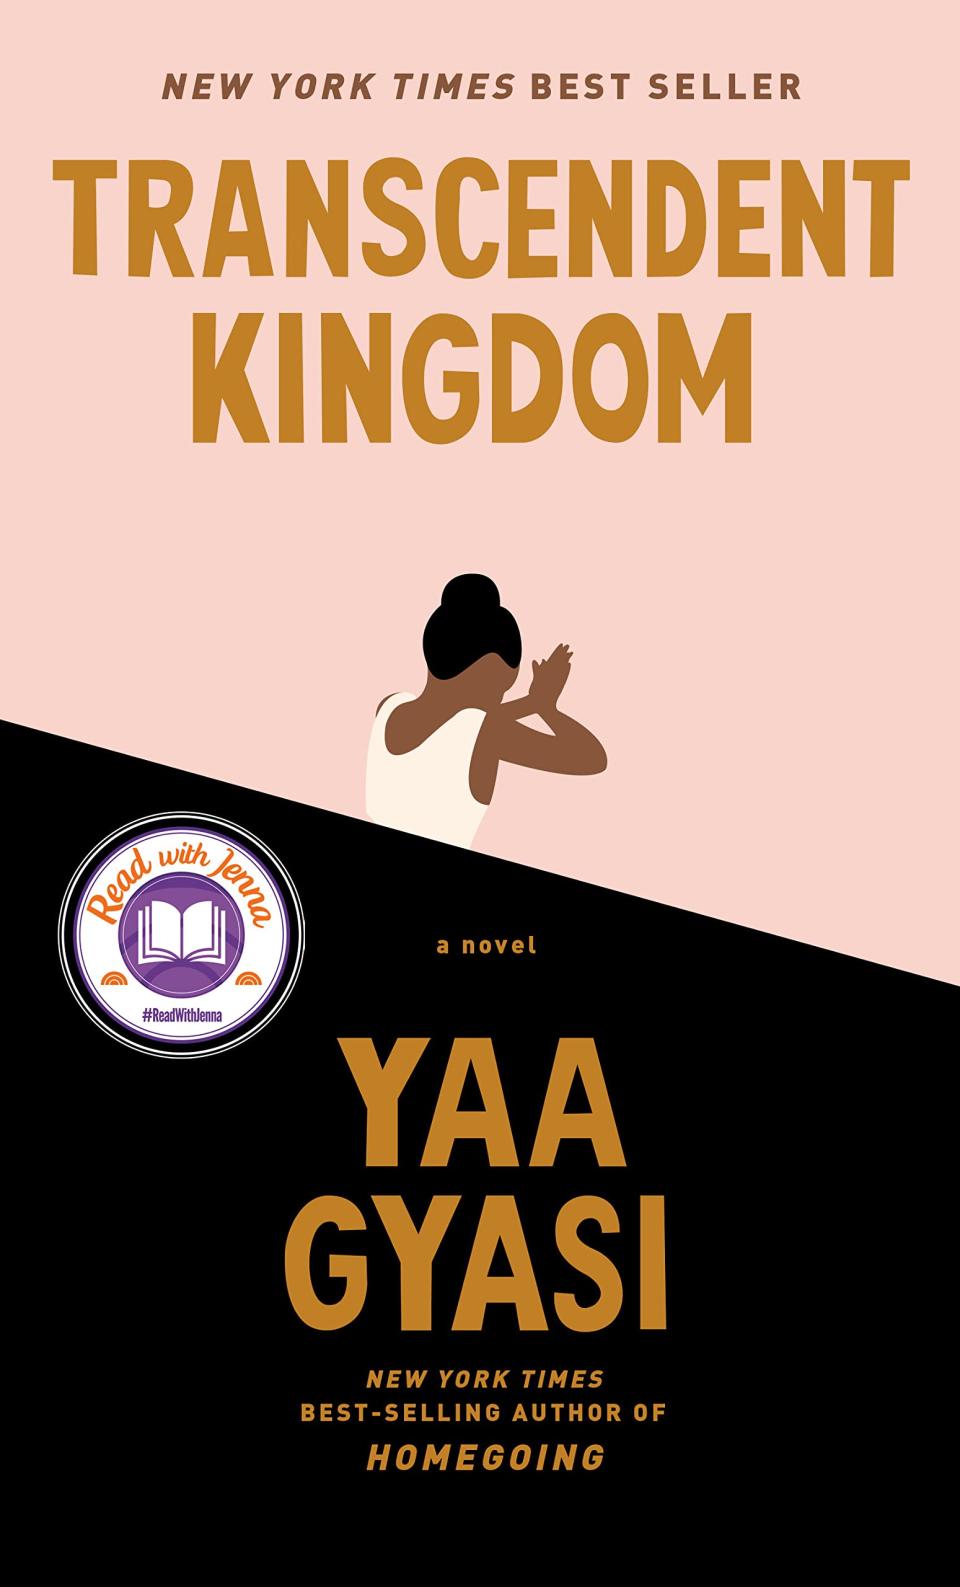 "Transcendent Kingdom" by Yaa Gyasi